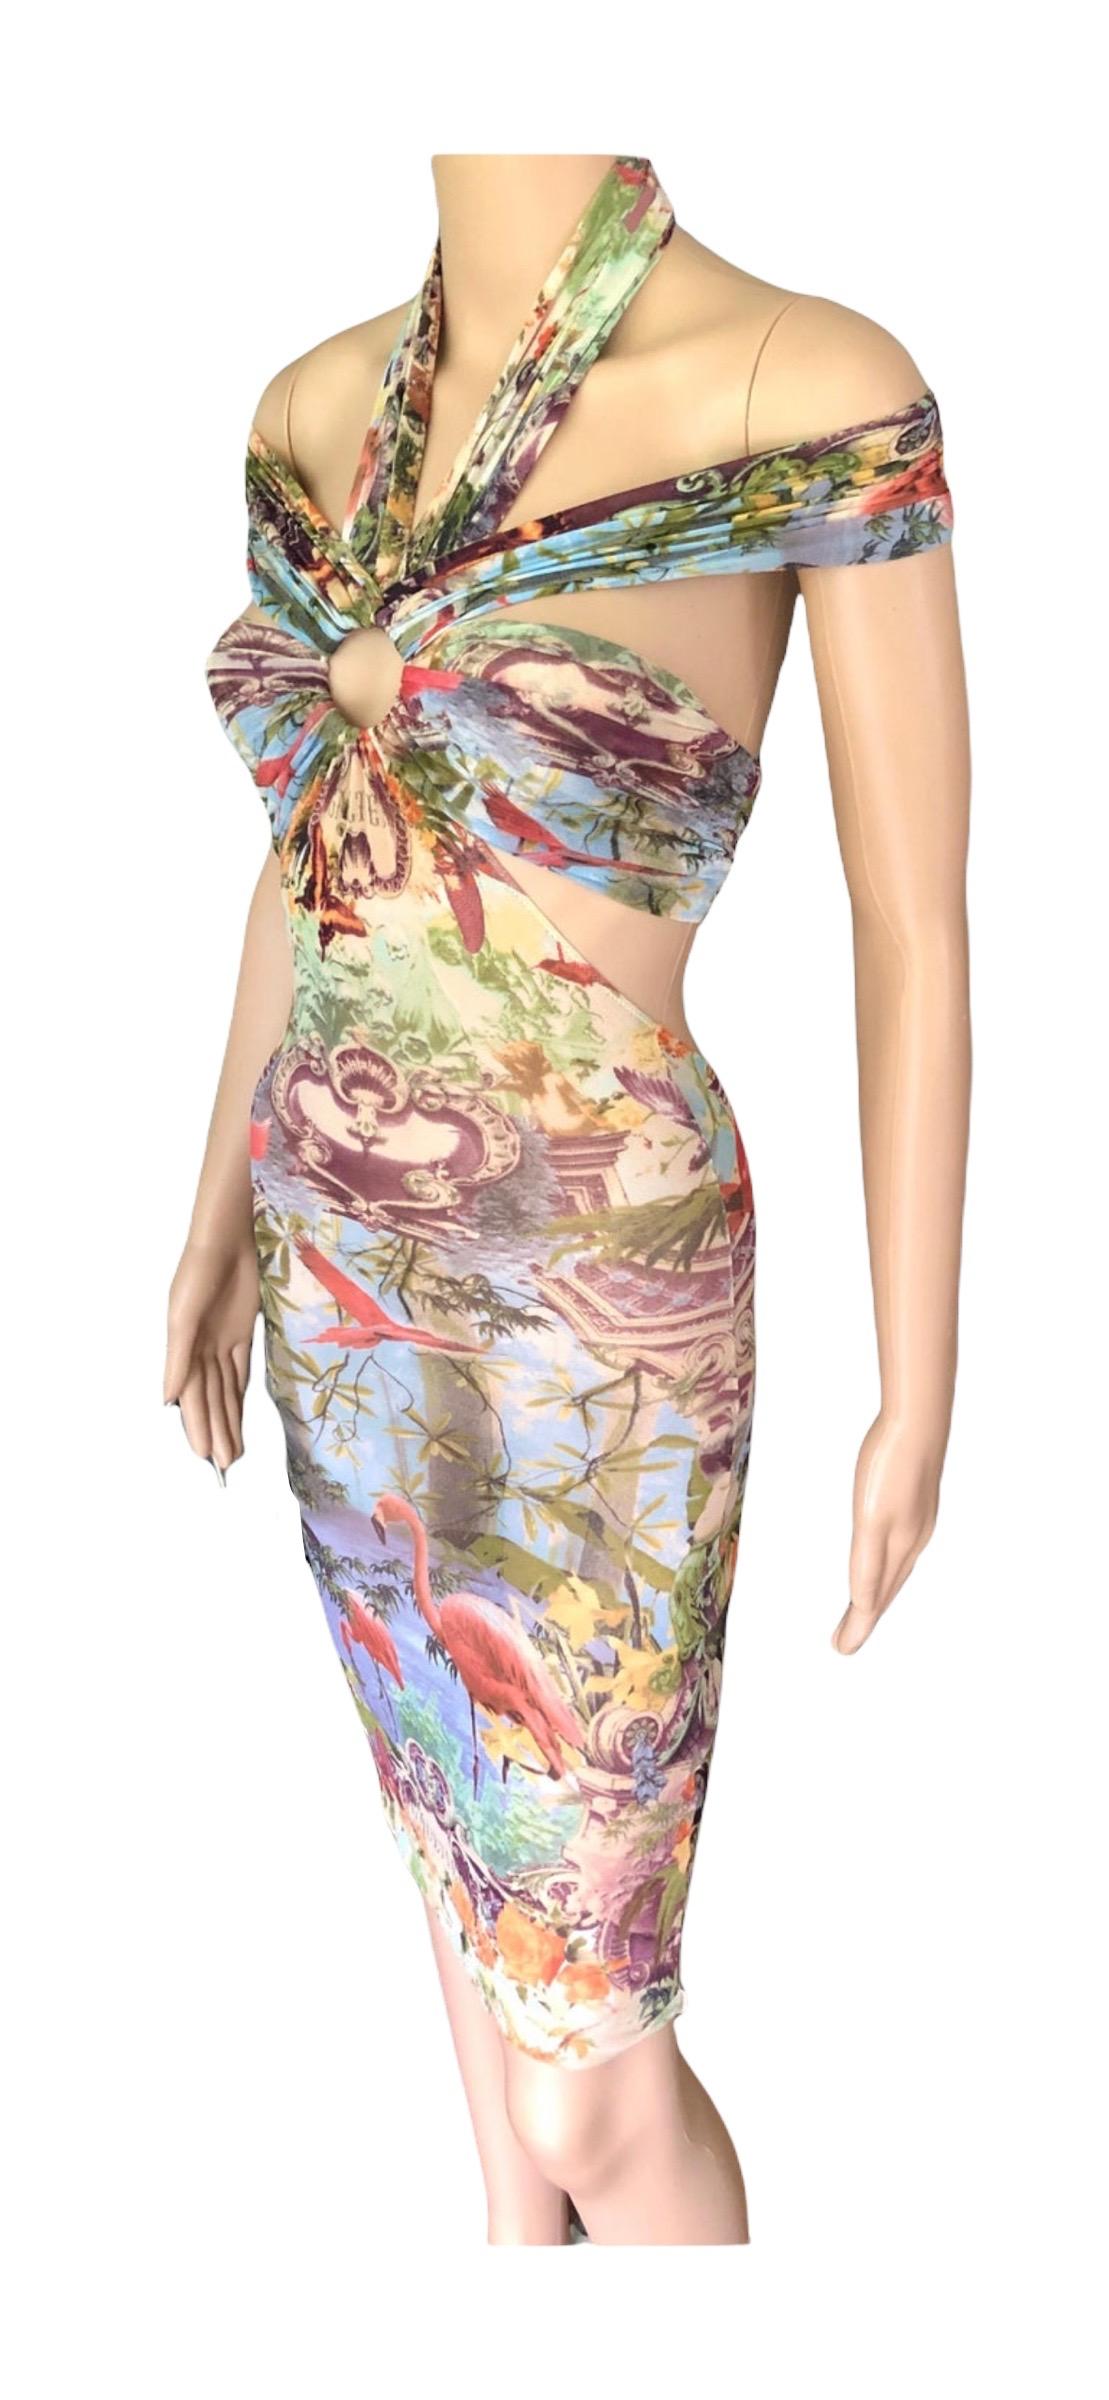 Beige Jean Paul Gaultier Soliel S/S1999 Flamingo Tropical Cutout Sheer Mesh Mini Dress For Sale